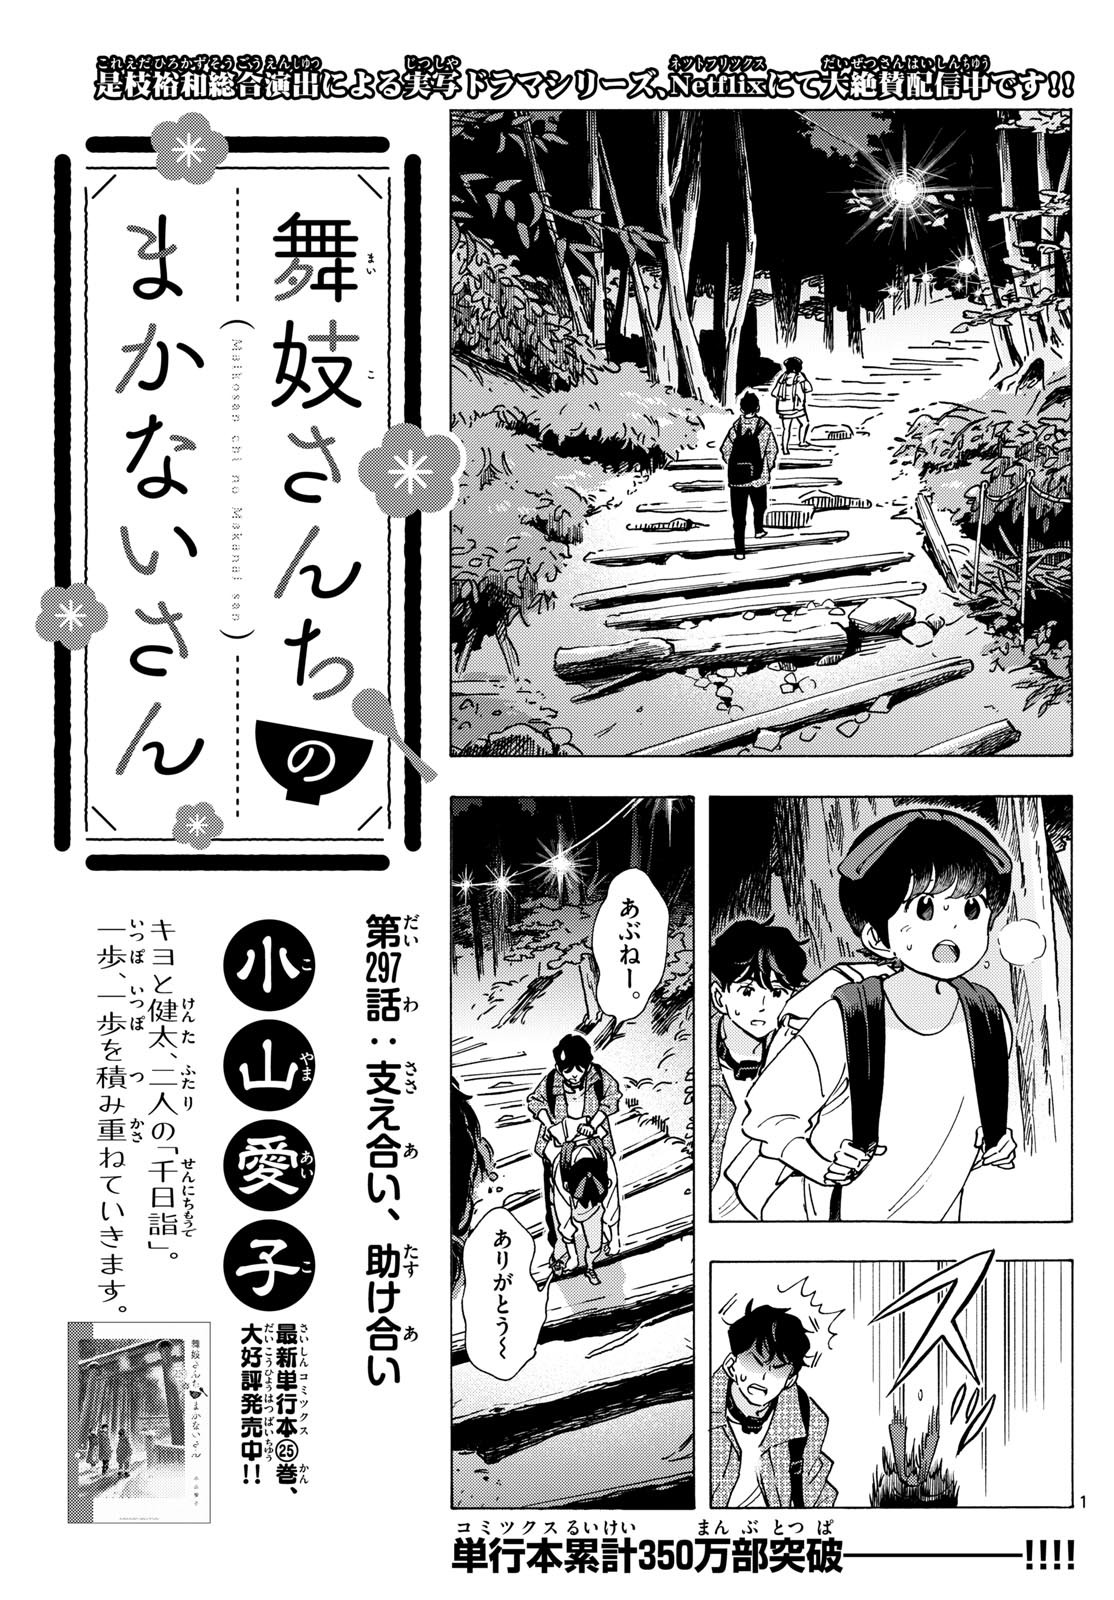 Maiko-san Chi no Makanai-san - Chapter 297 - Page 1